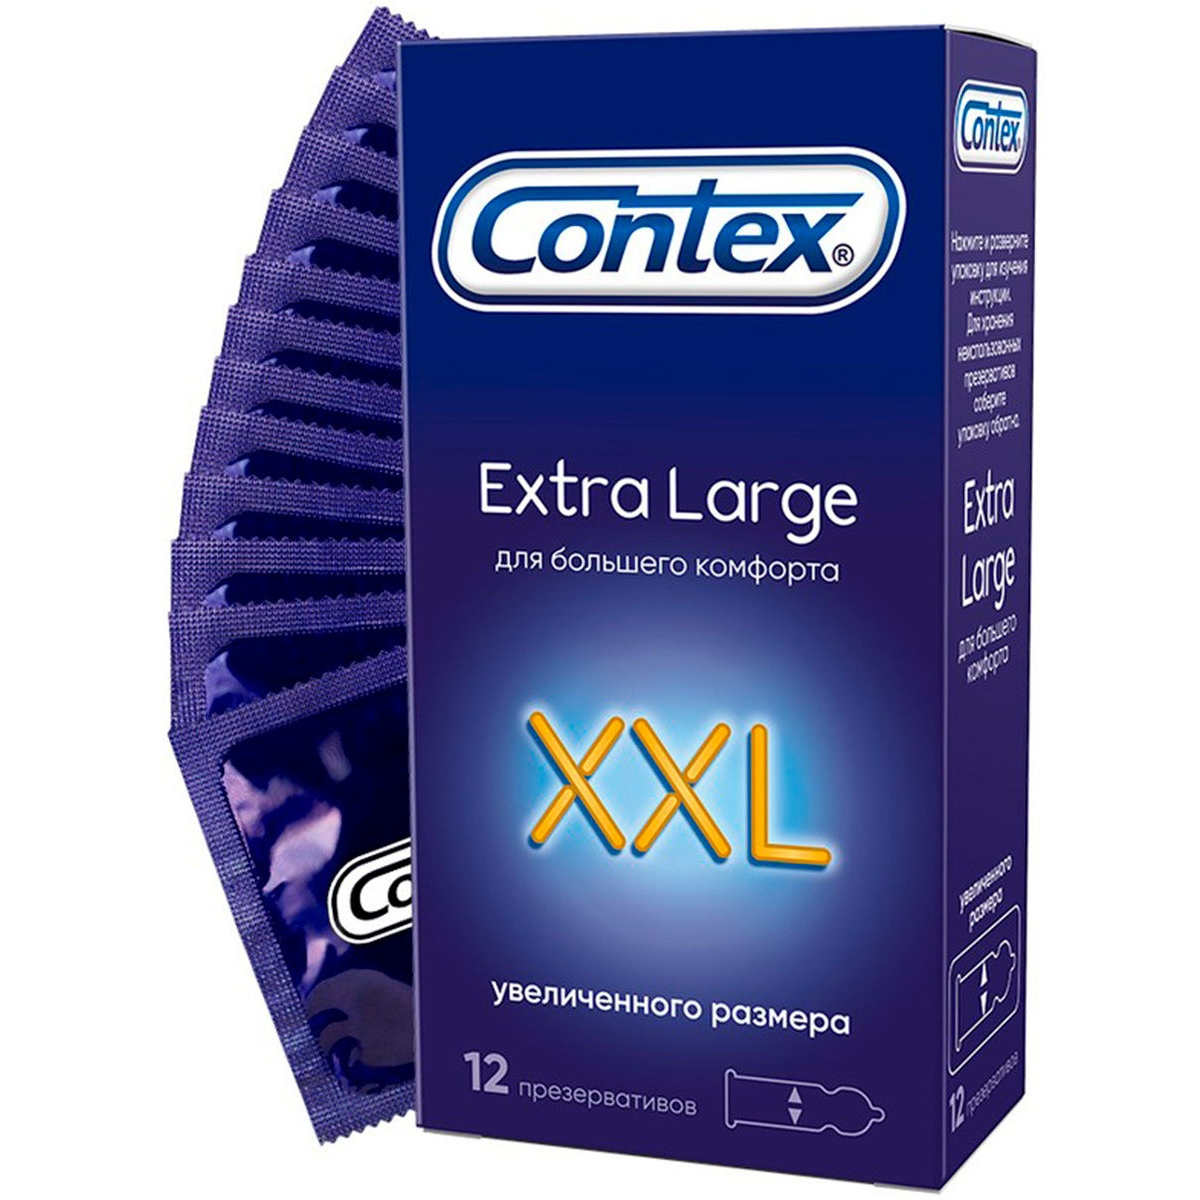 Презервативы Contex XXL Extra large №12 цена и фото